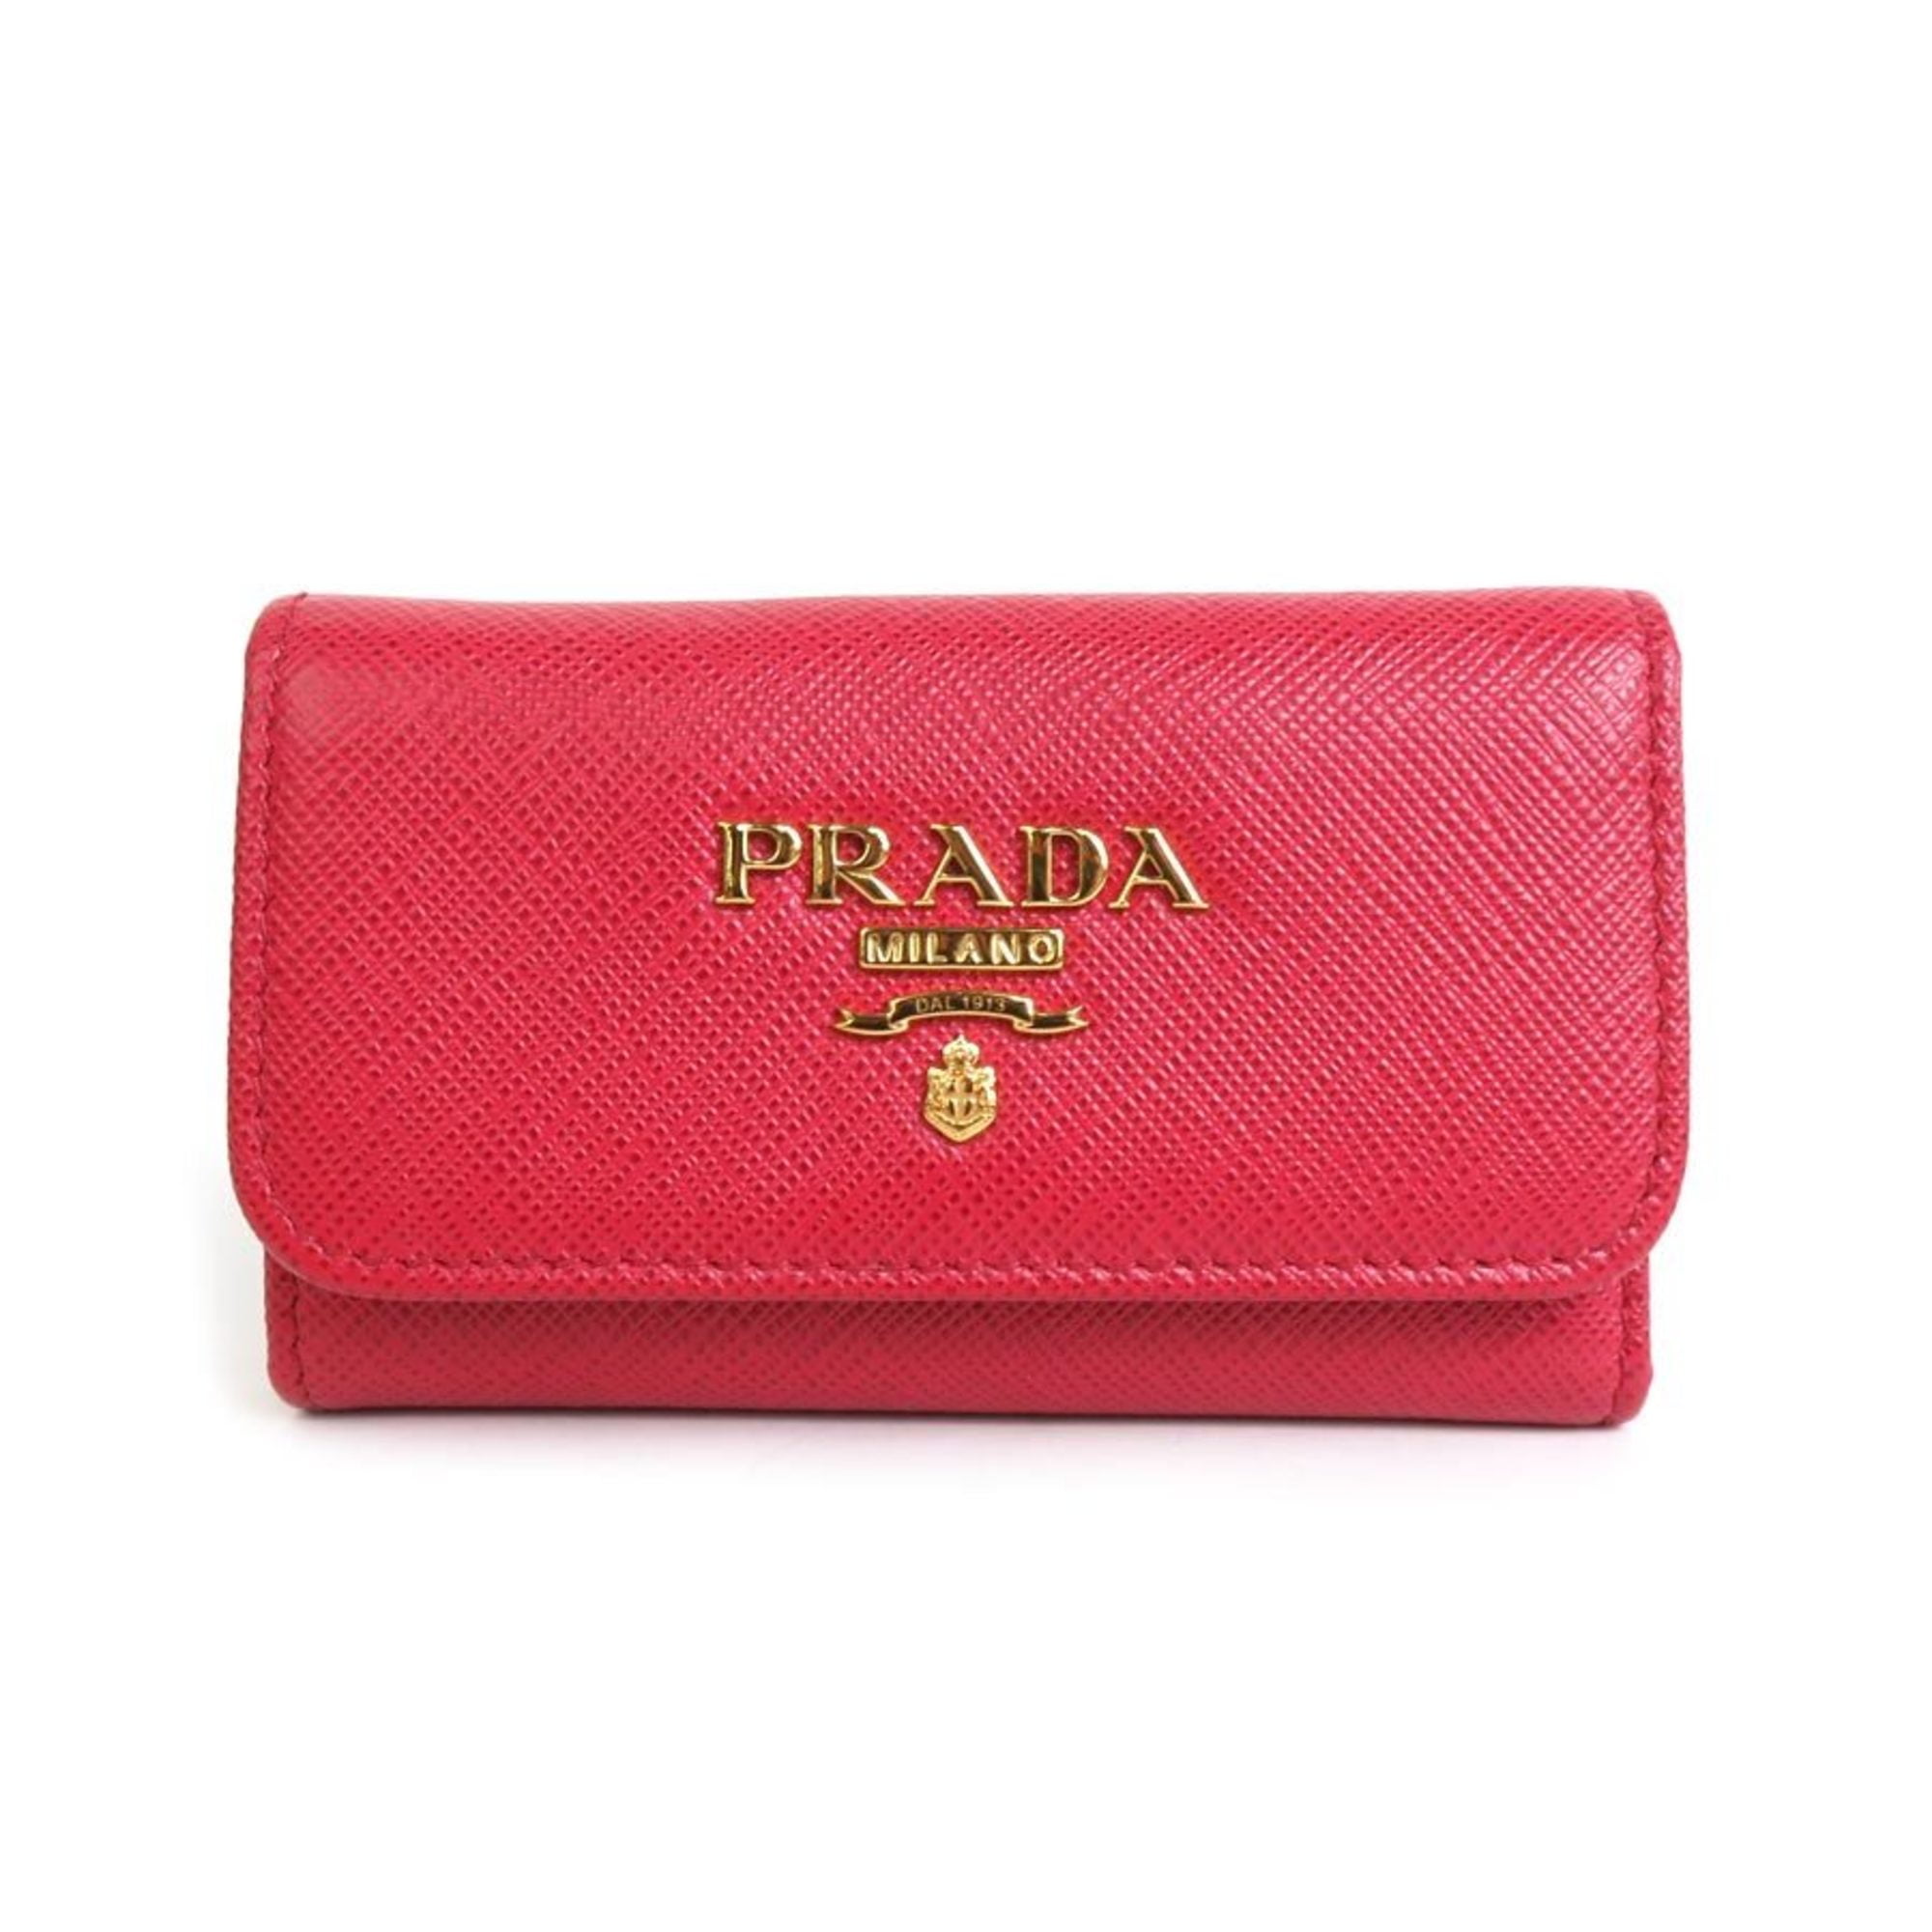 Vintage Prada Milano Cherry Red Leather Purse | Red leather purse, Leather  purses, Red leather